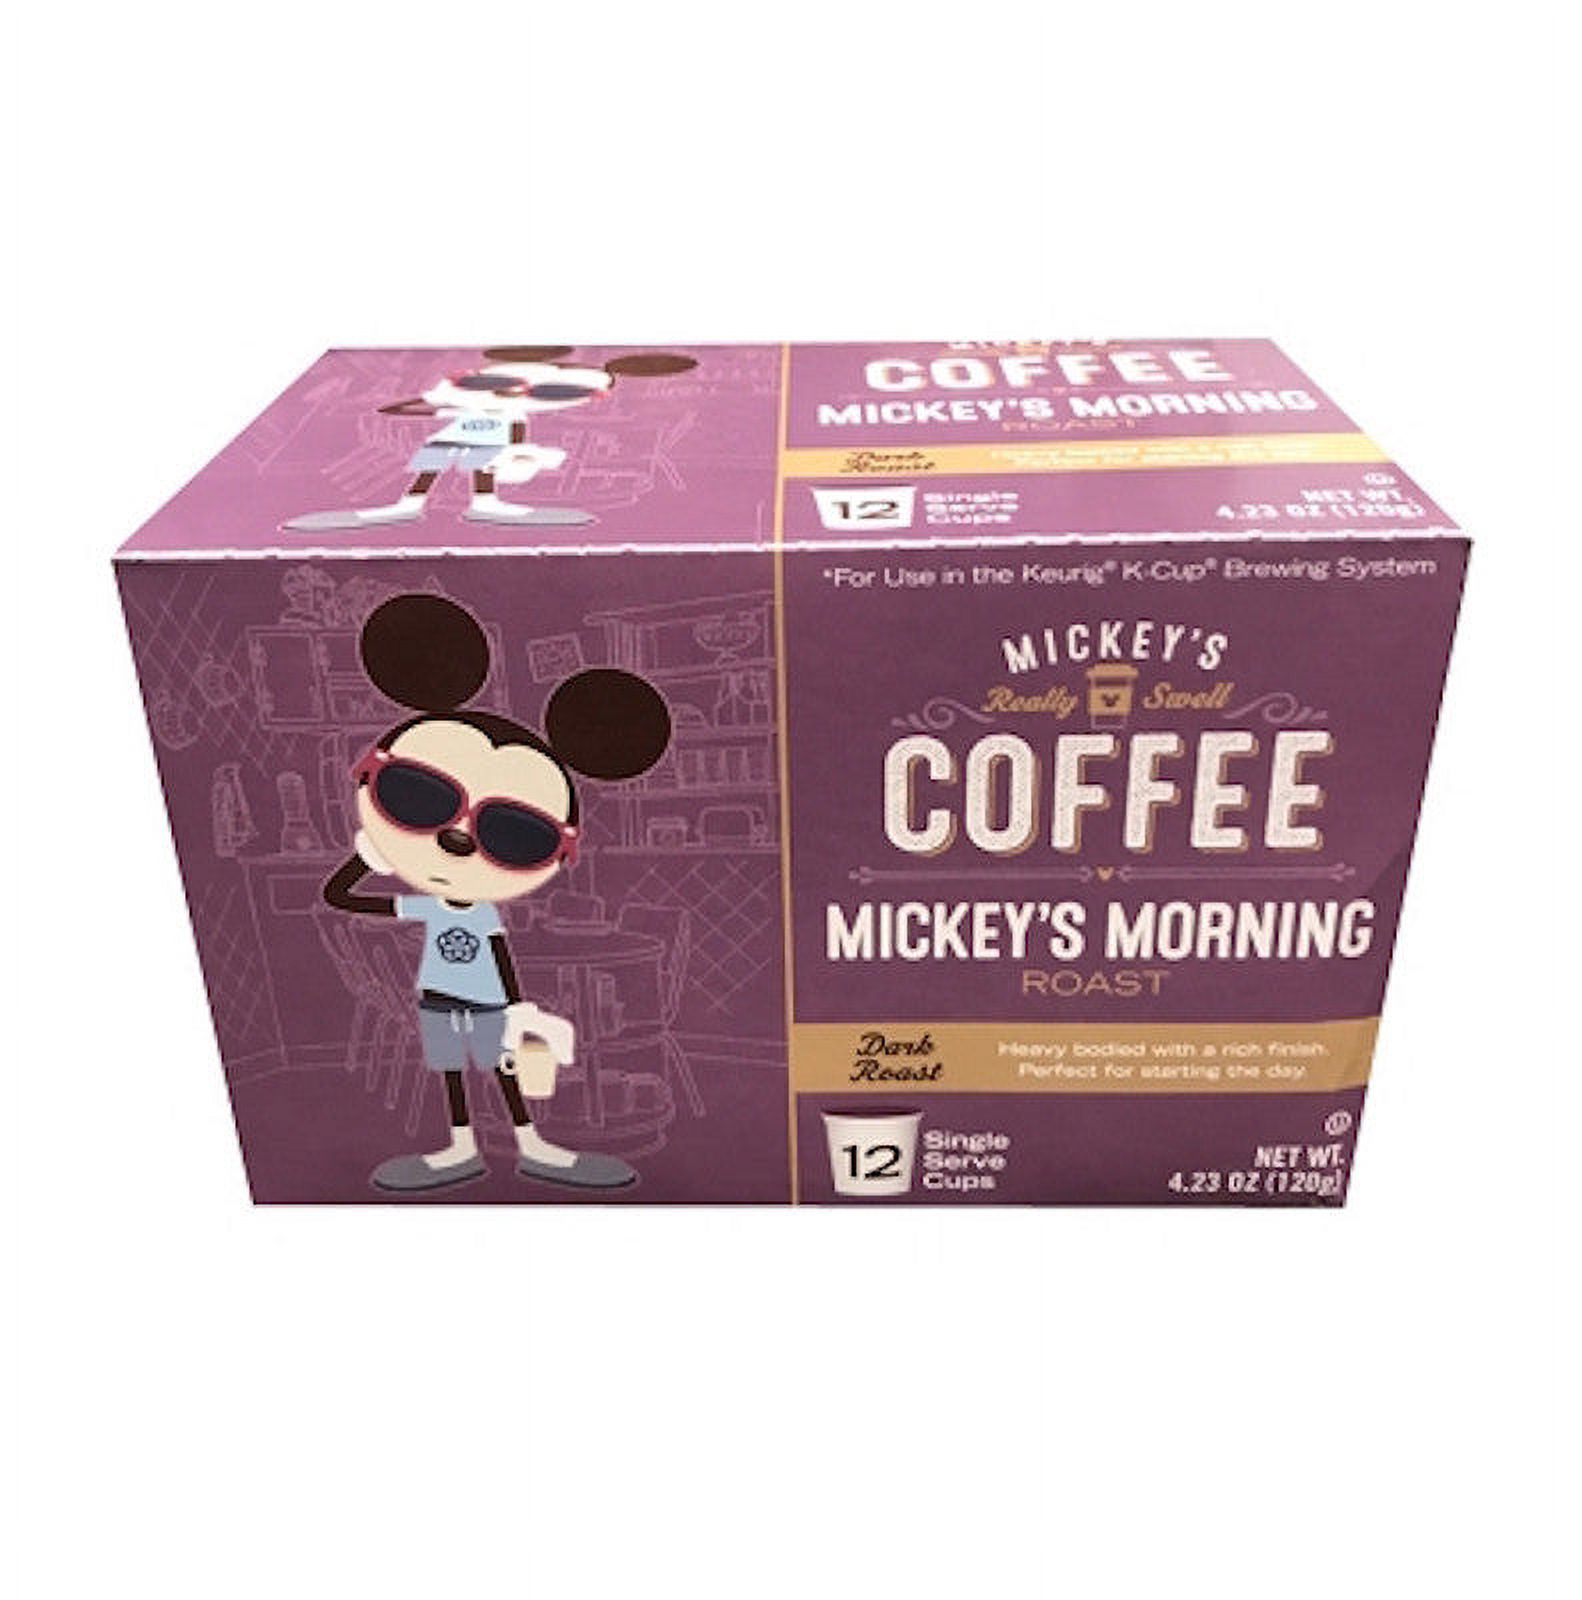 Disney Mickey's Coffee Mickey's Morning Roast 12 Keurig K-Cup New Sealed - image 3 of 3